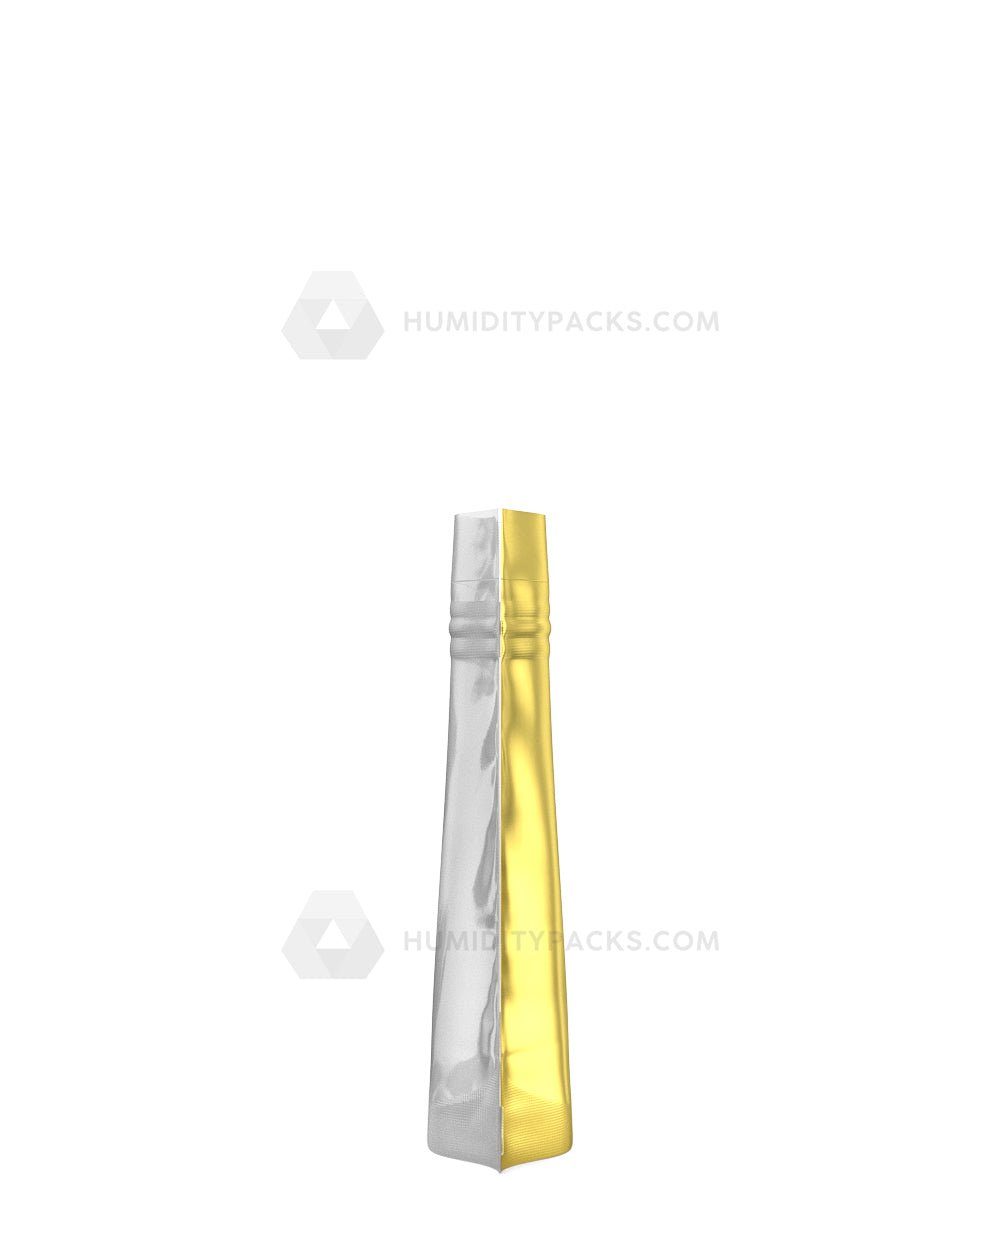 Matte-Gold 3.6" x 5" Vista Mylar Tamper Evident Tear Notch Bags (3.5 grams) 1000/Box Humidity Packs - 5